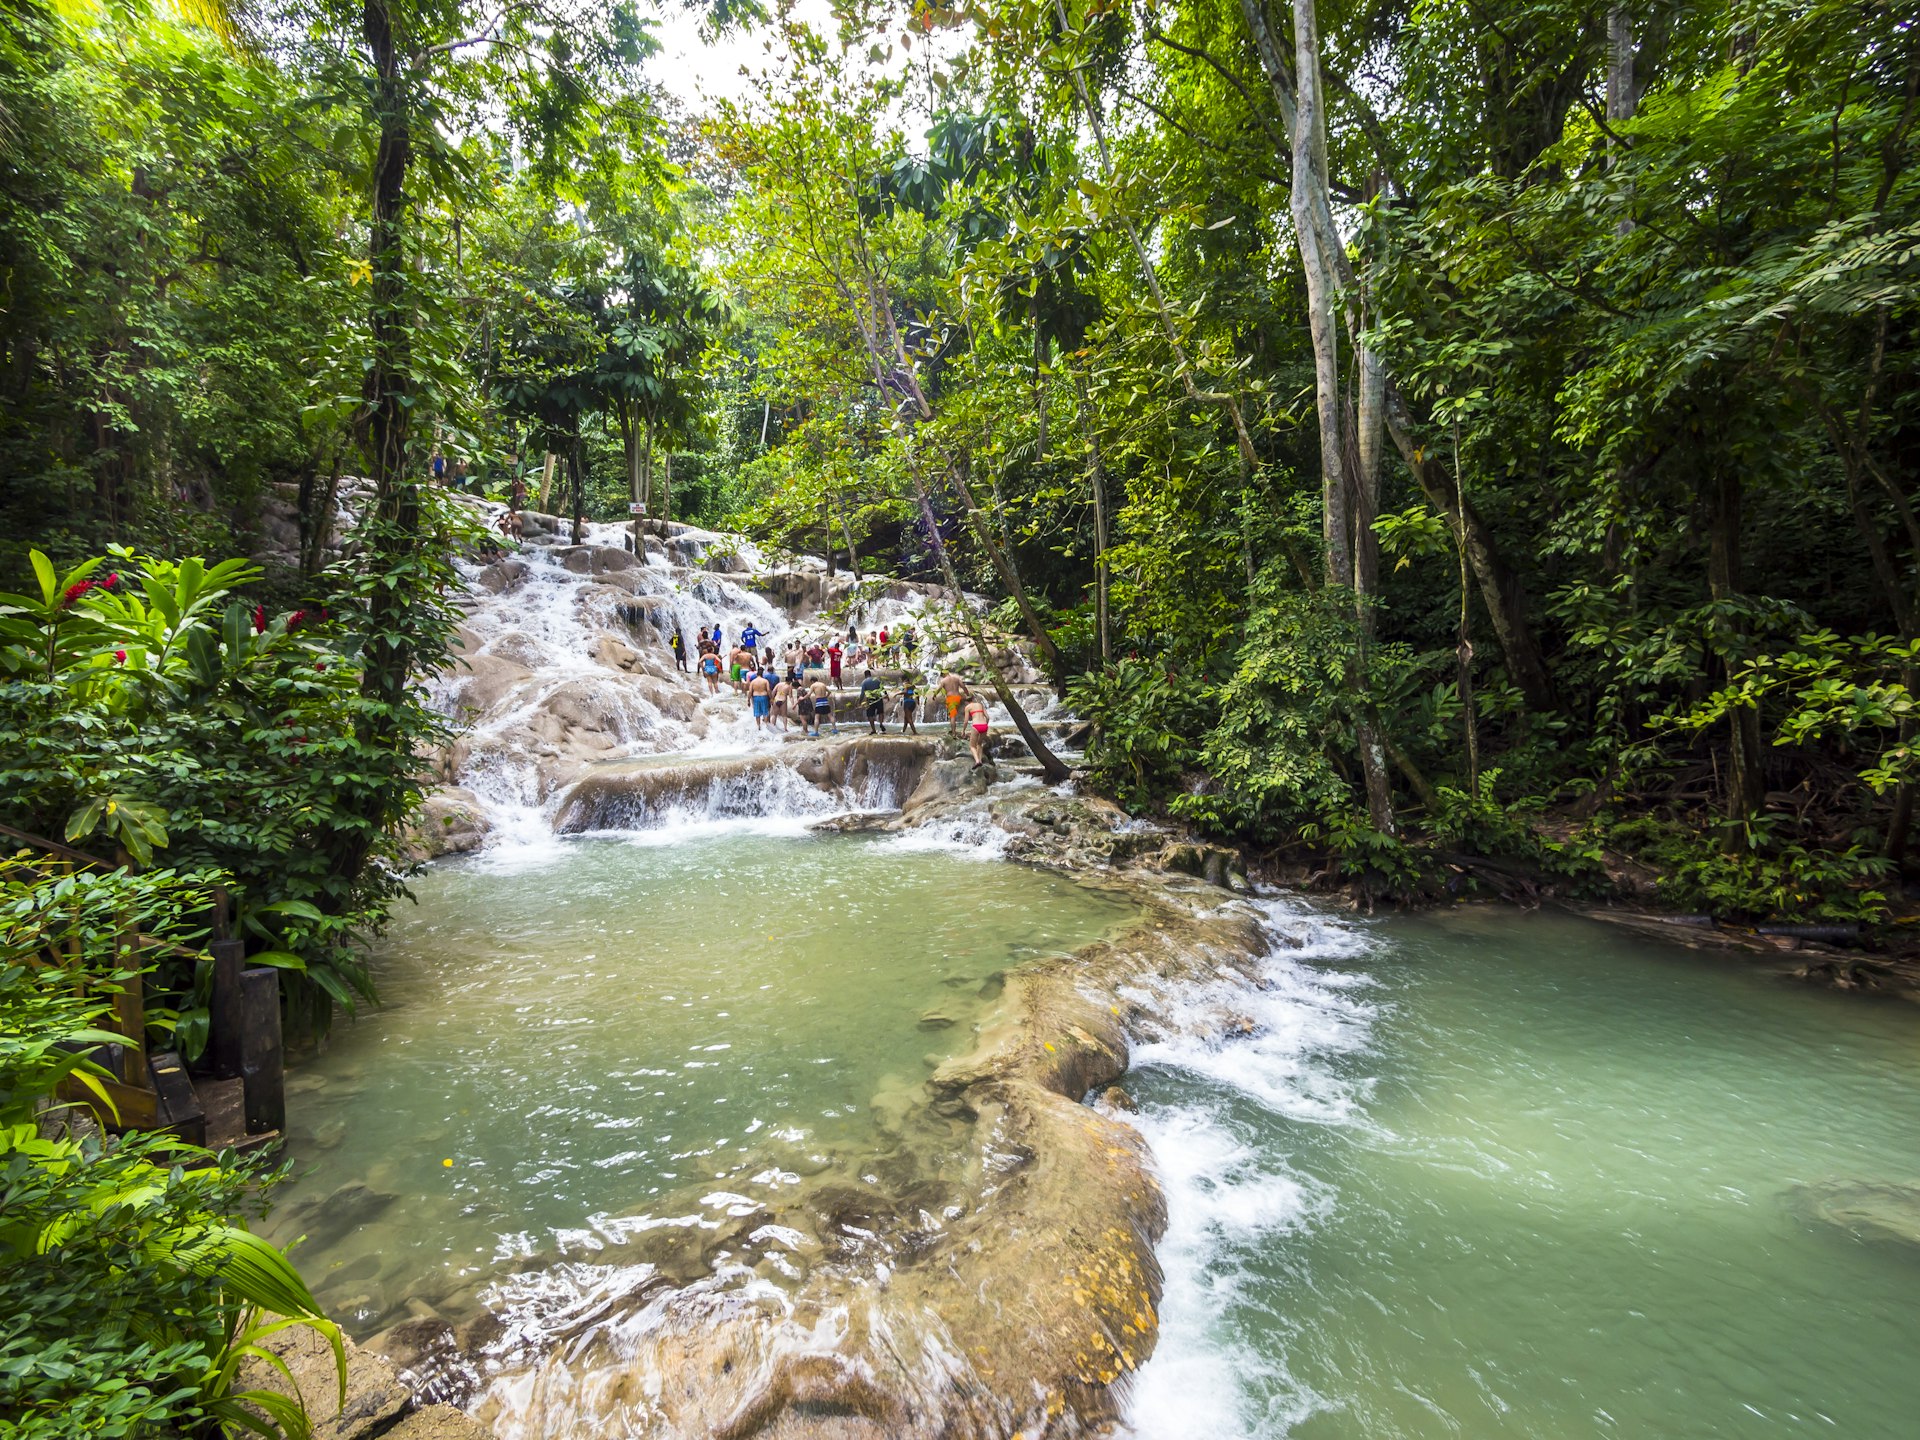 People climbing the cascades at Dunn's River Falls, Jamaica